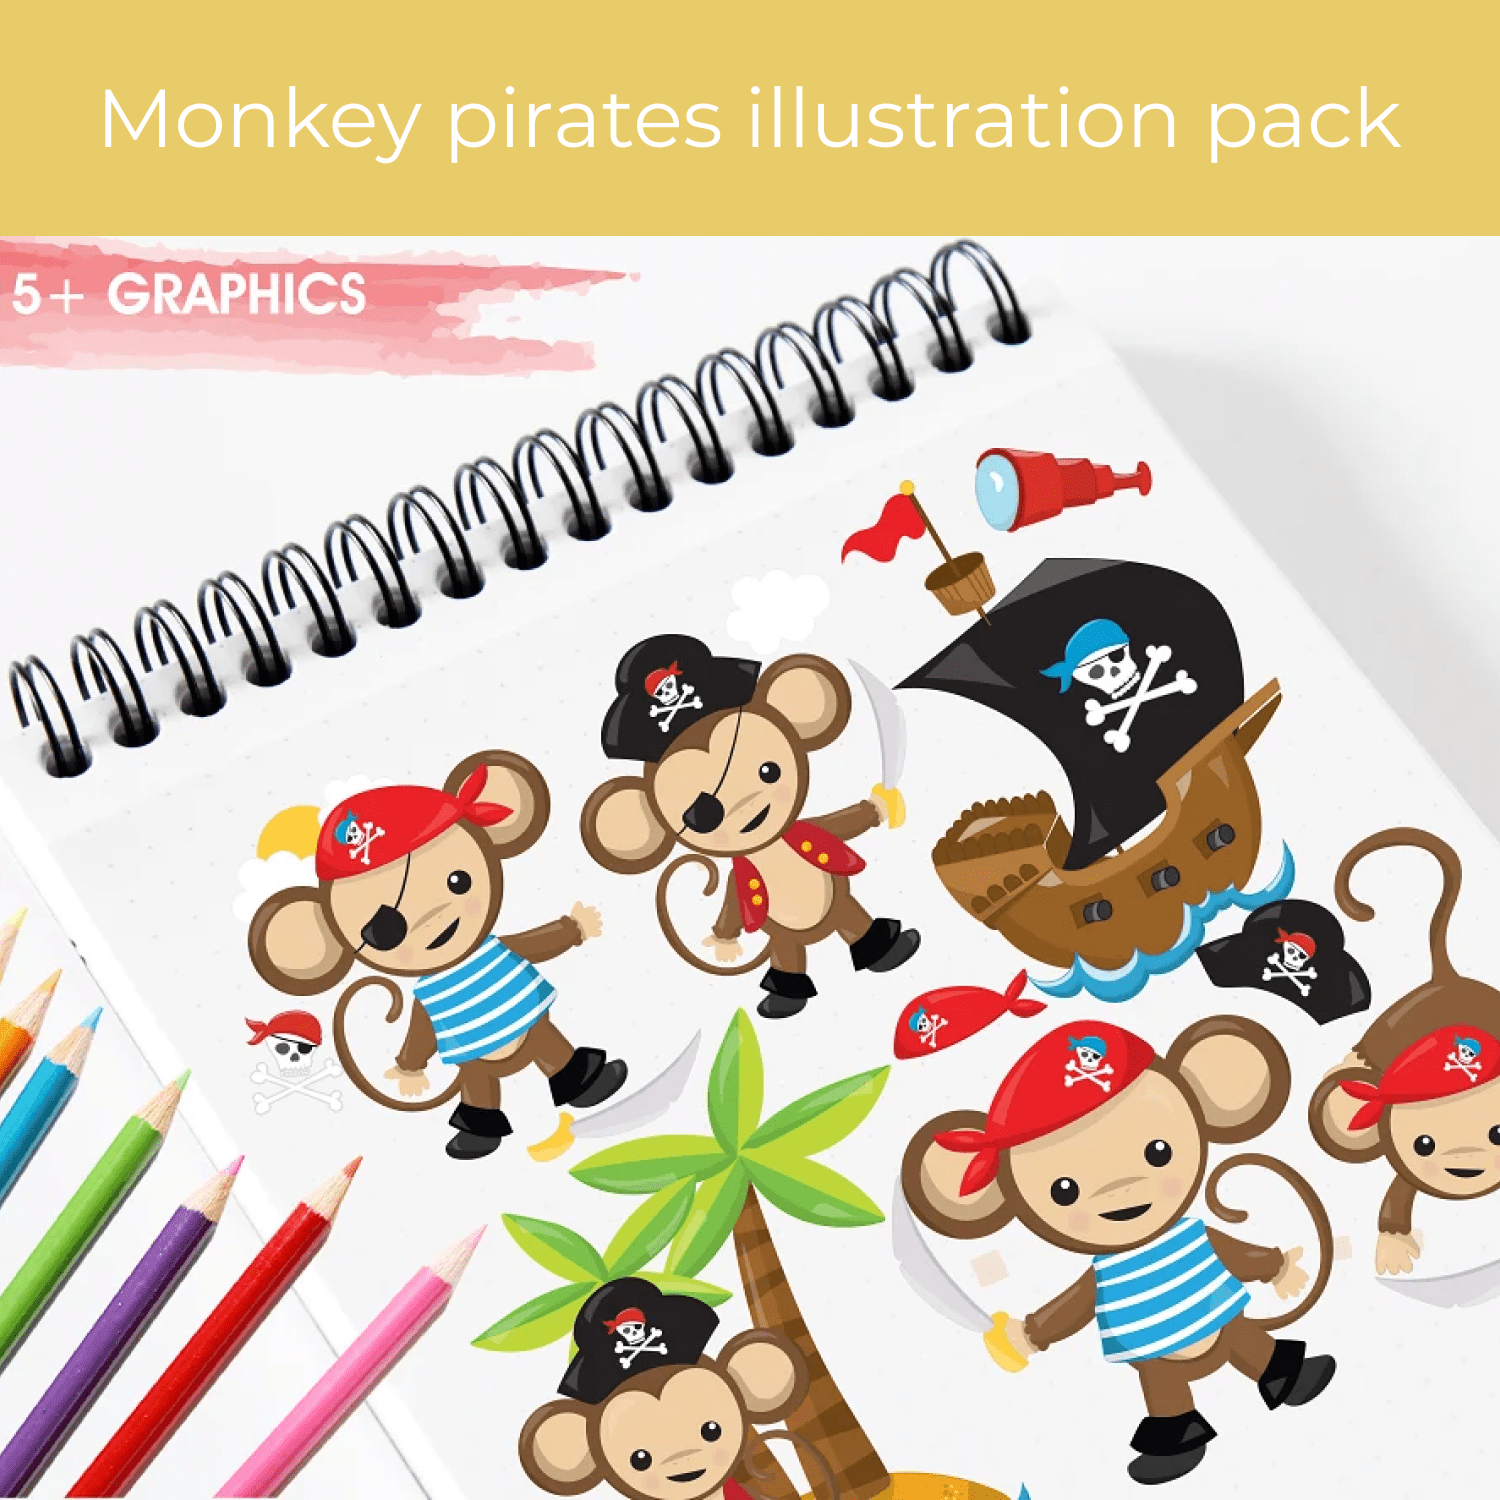 Monkey pirates illustration pack cover.